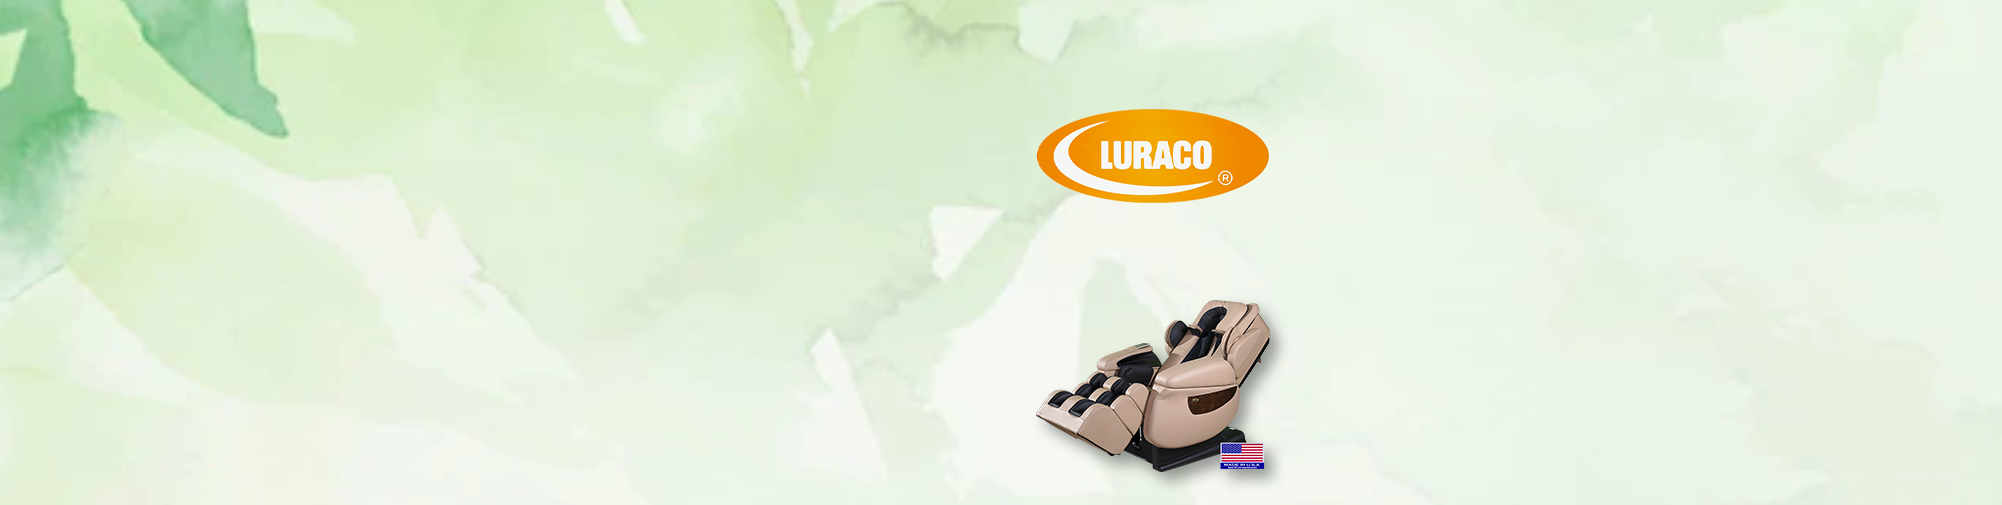 Luraco Technologies، صندلی های بهداشتی | ماساژ صندلی جهان